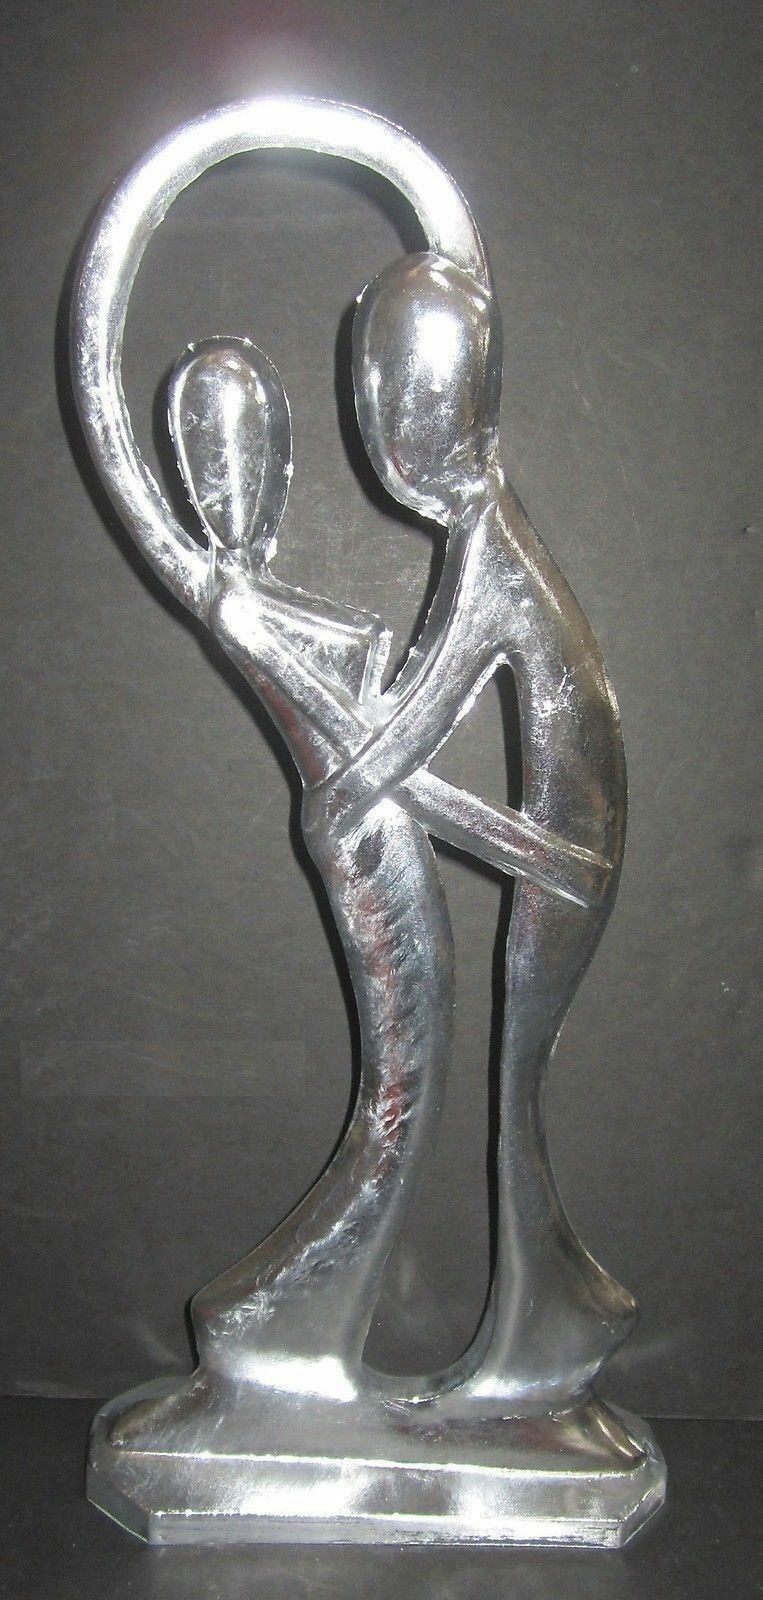 Frankart style art deco dancing couple figurine un-finished aluminum casting USA